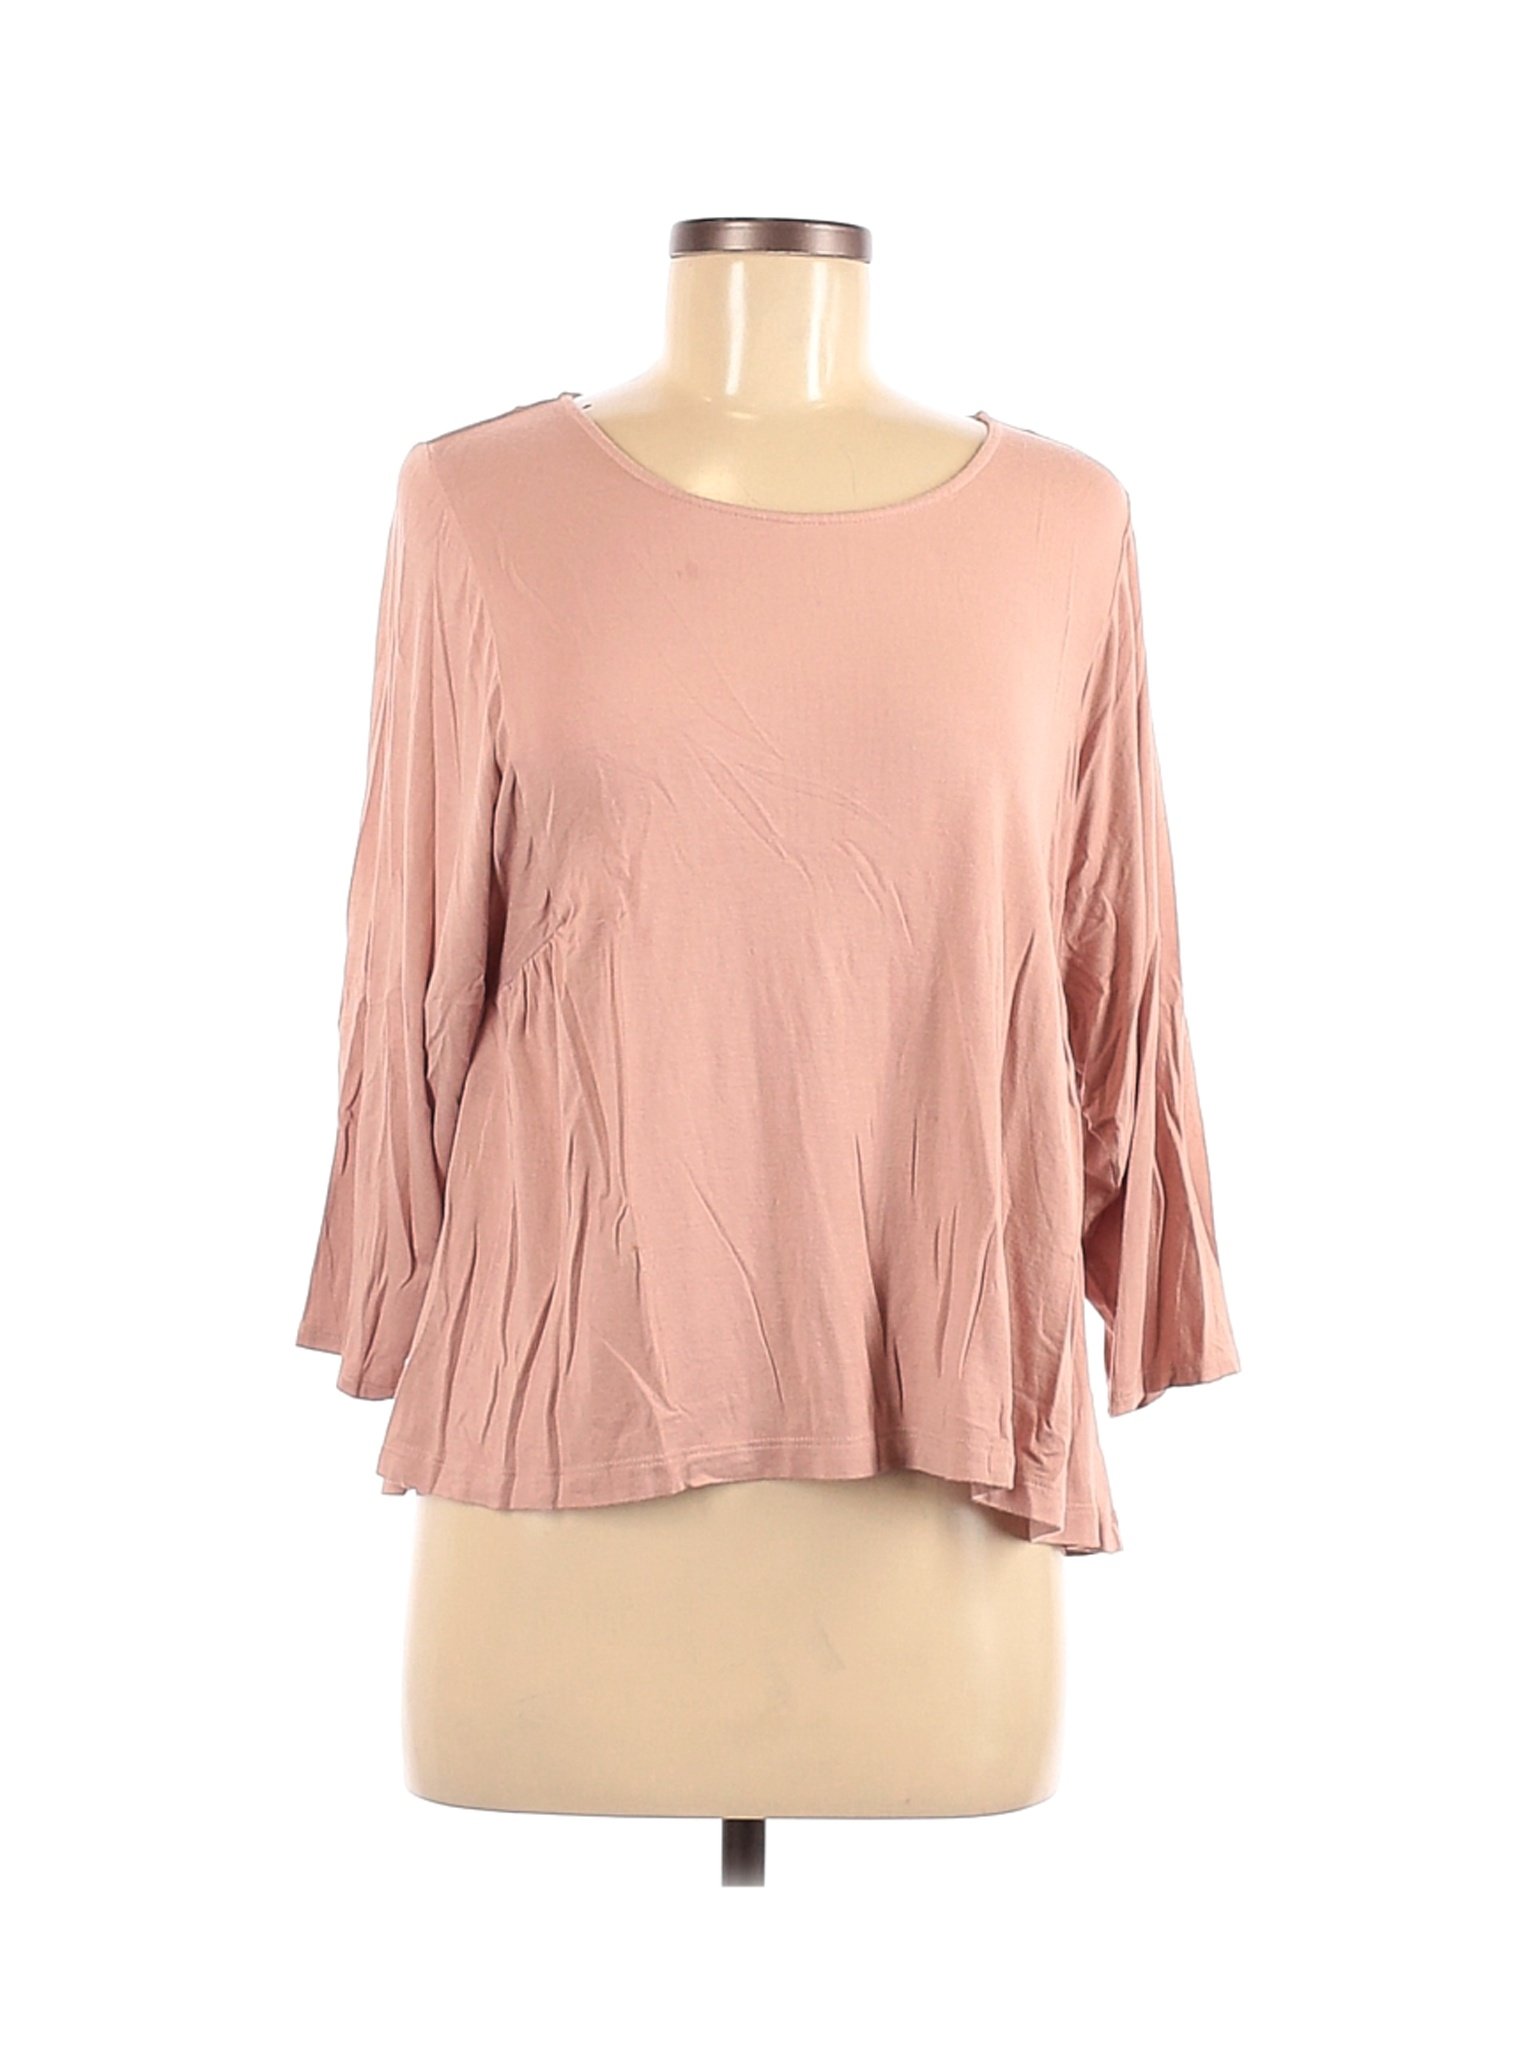 Tahari Women Pink 3/4 Sleeve Top M | eBay